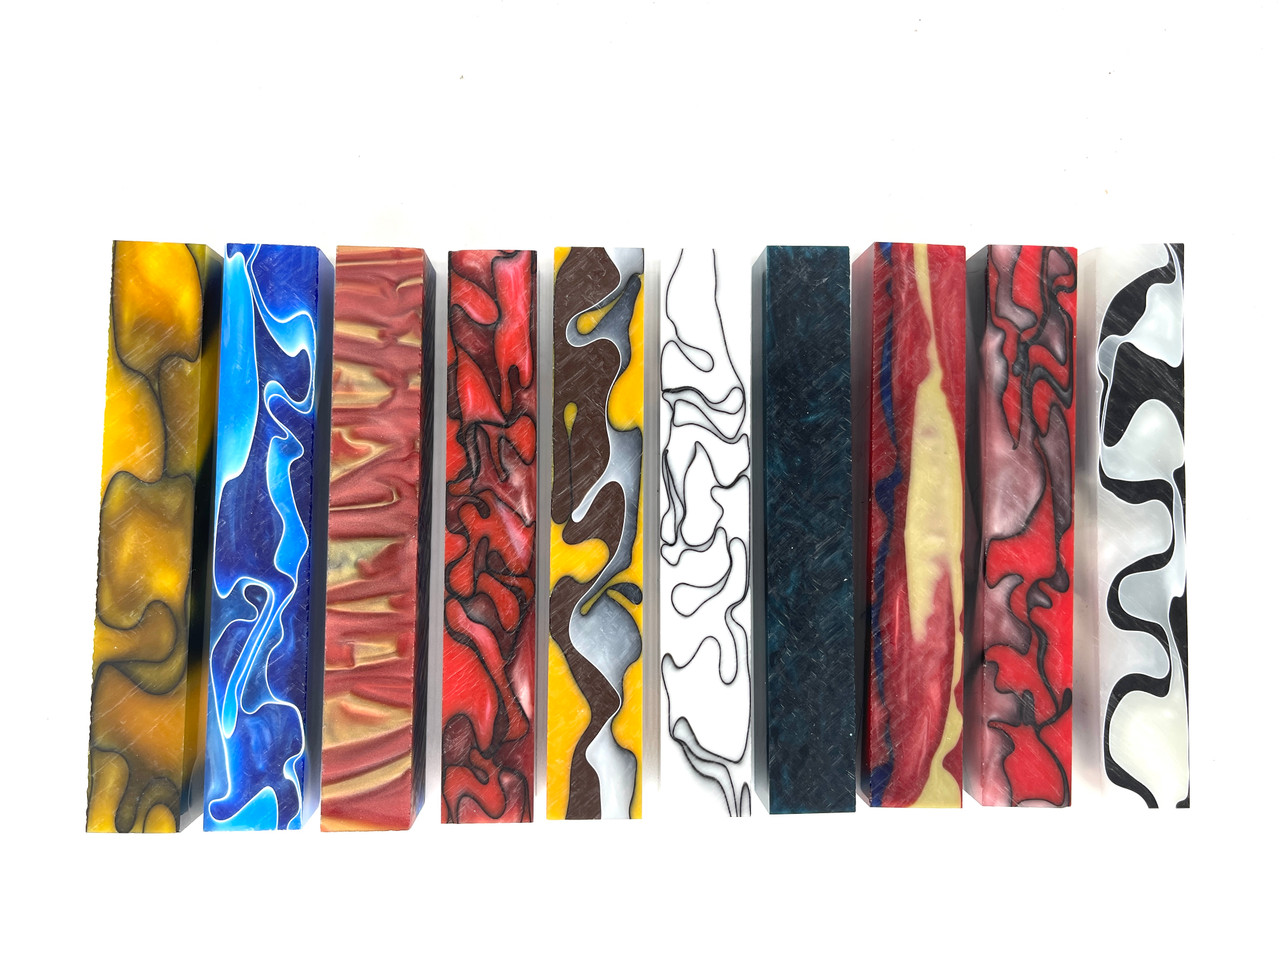 10 pack Assorted Acrylic Pen Blanks - Pen Kit Mall